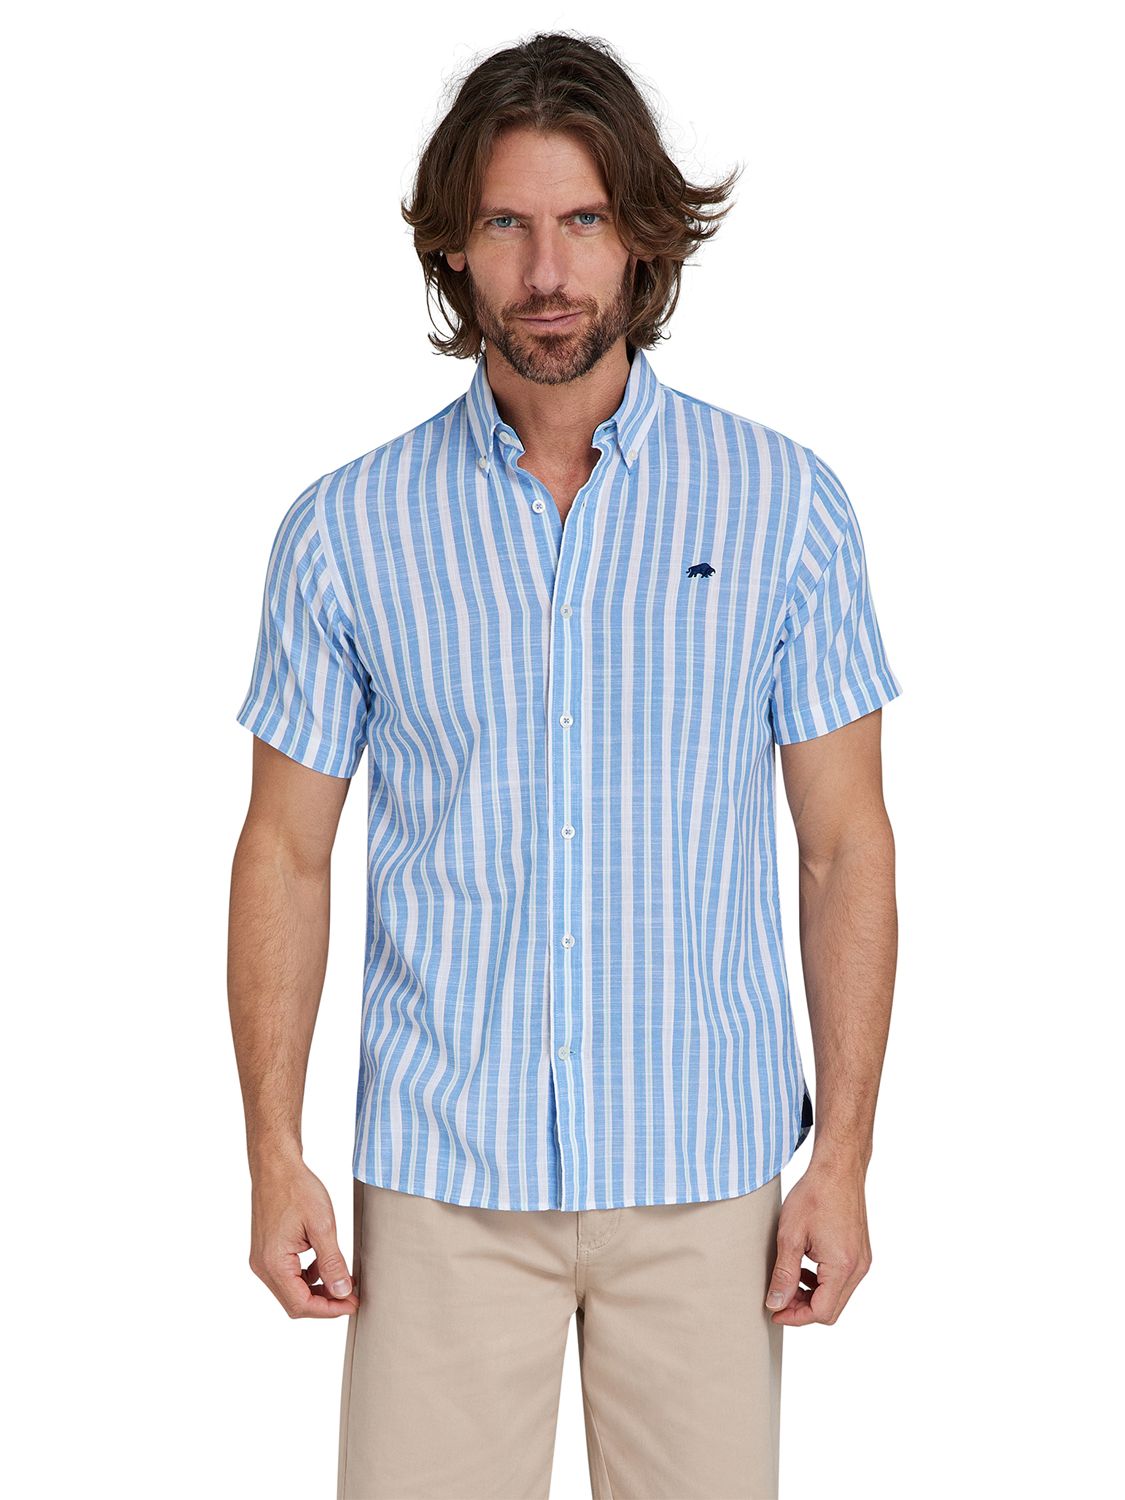 Raging Bull Short Sleeve Multi Stripe Linen Look Shirt, Mid Blue, XXXXXL